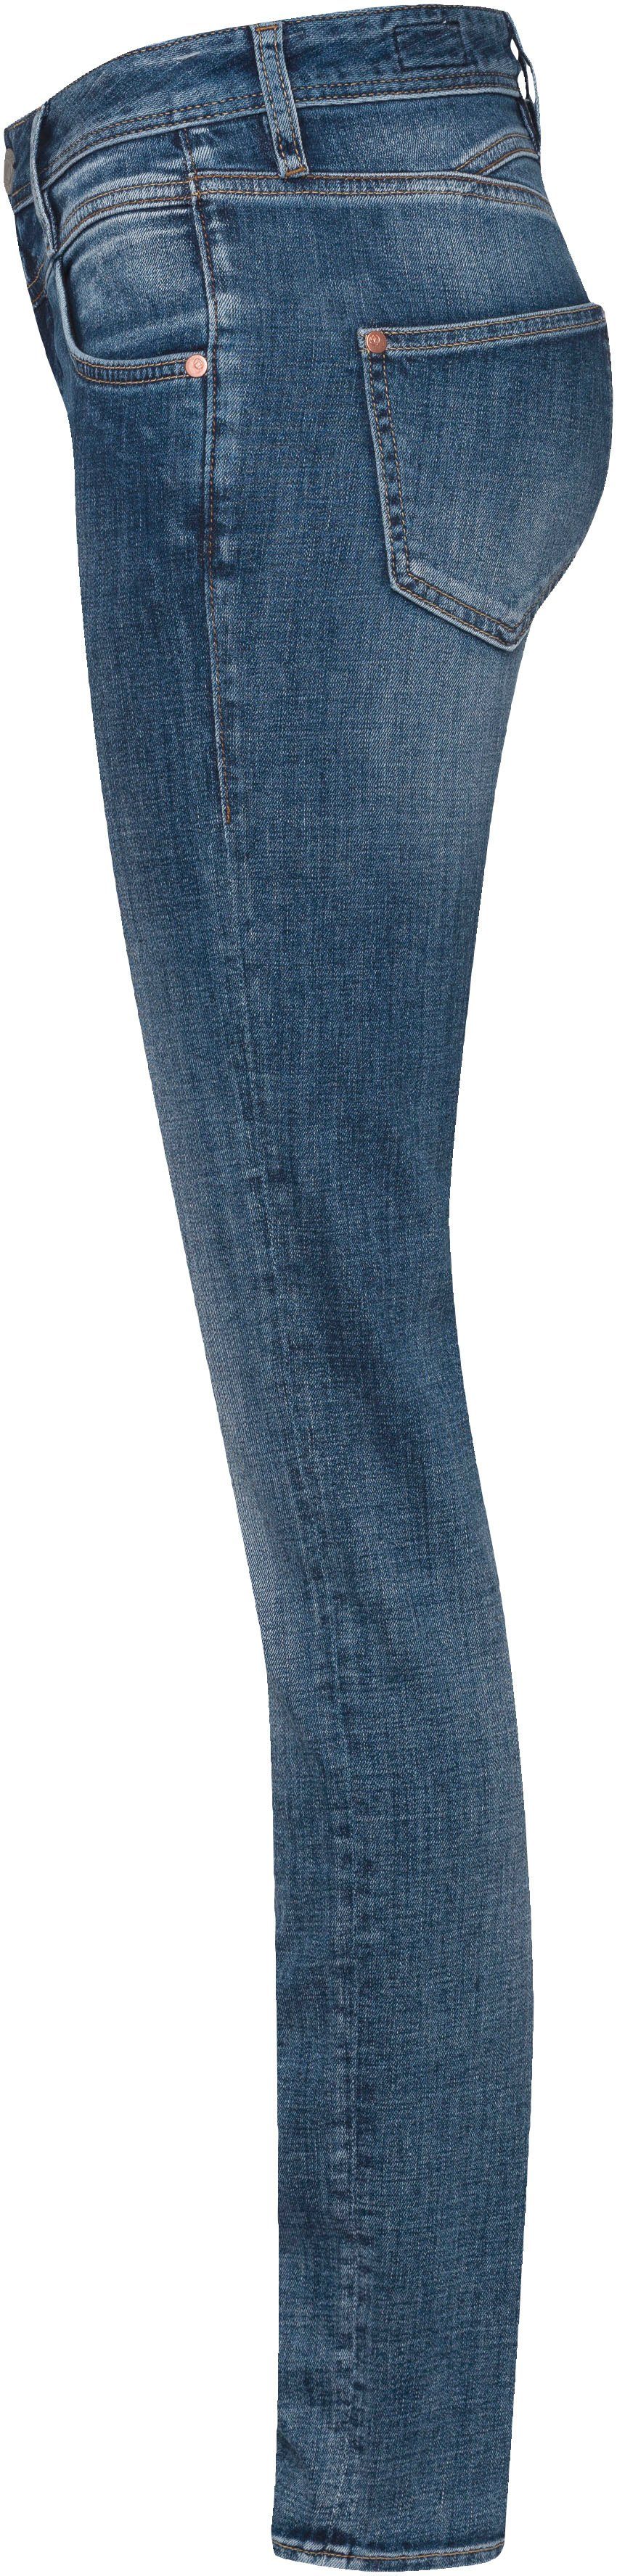 DENIM bamiyan Herrlicher Recycled Waist Normal blue SLIM 868 Polyester RECYCLED PEPPY Slim-fit-Jeans